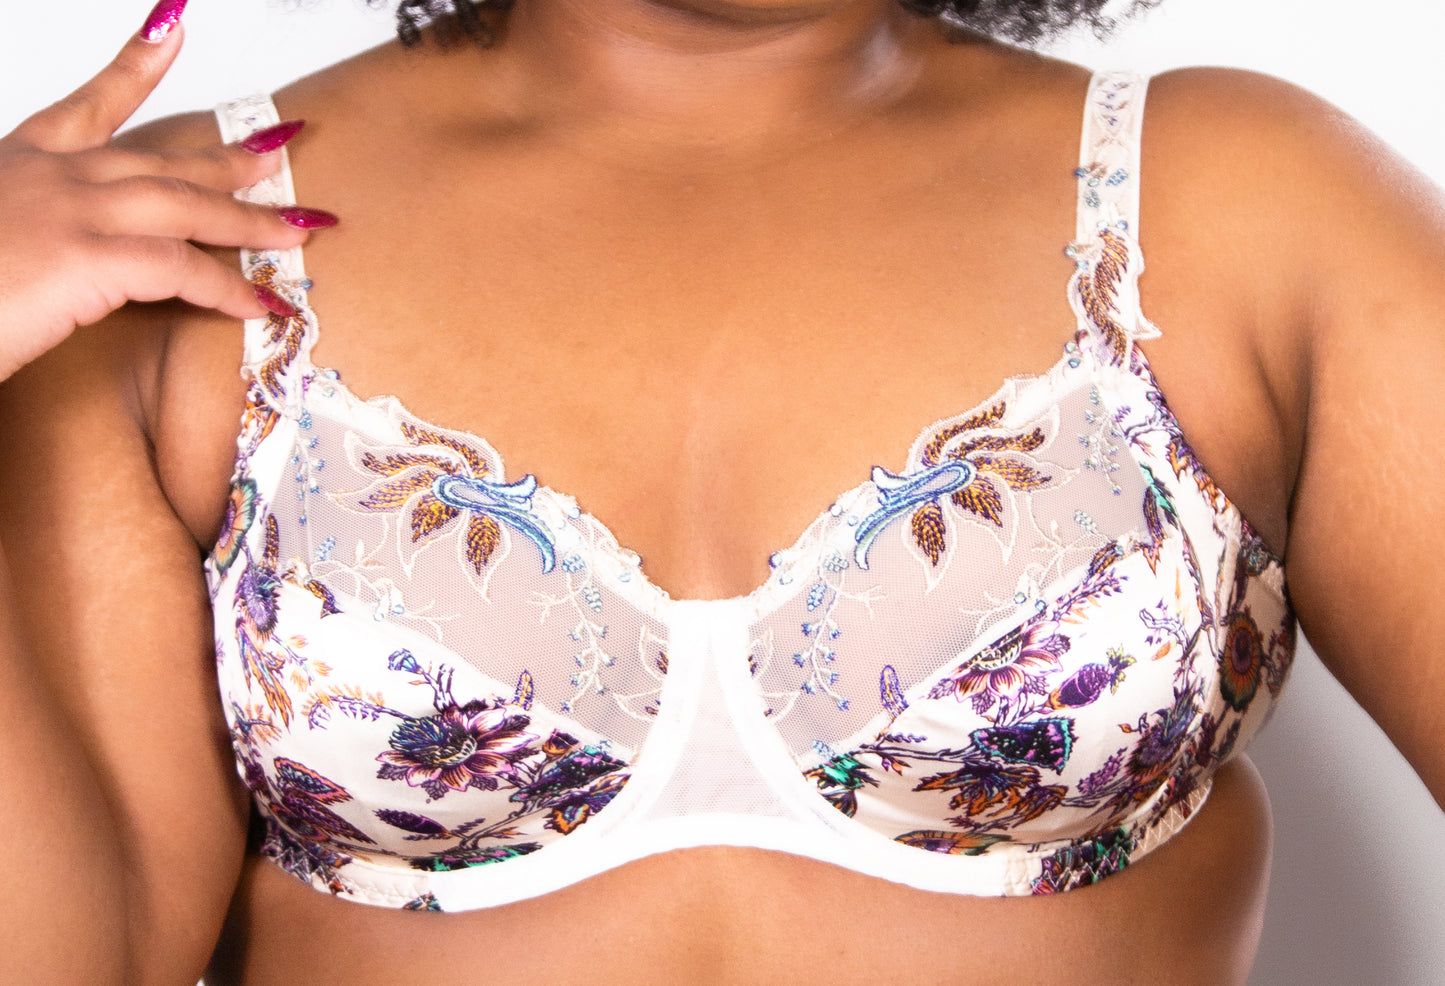 32h bras: Women's Intimate Bras